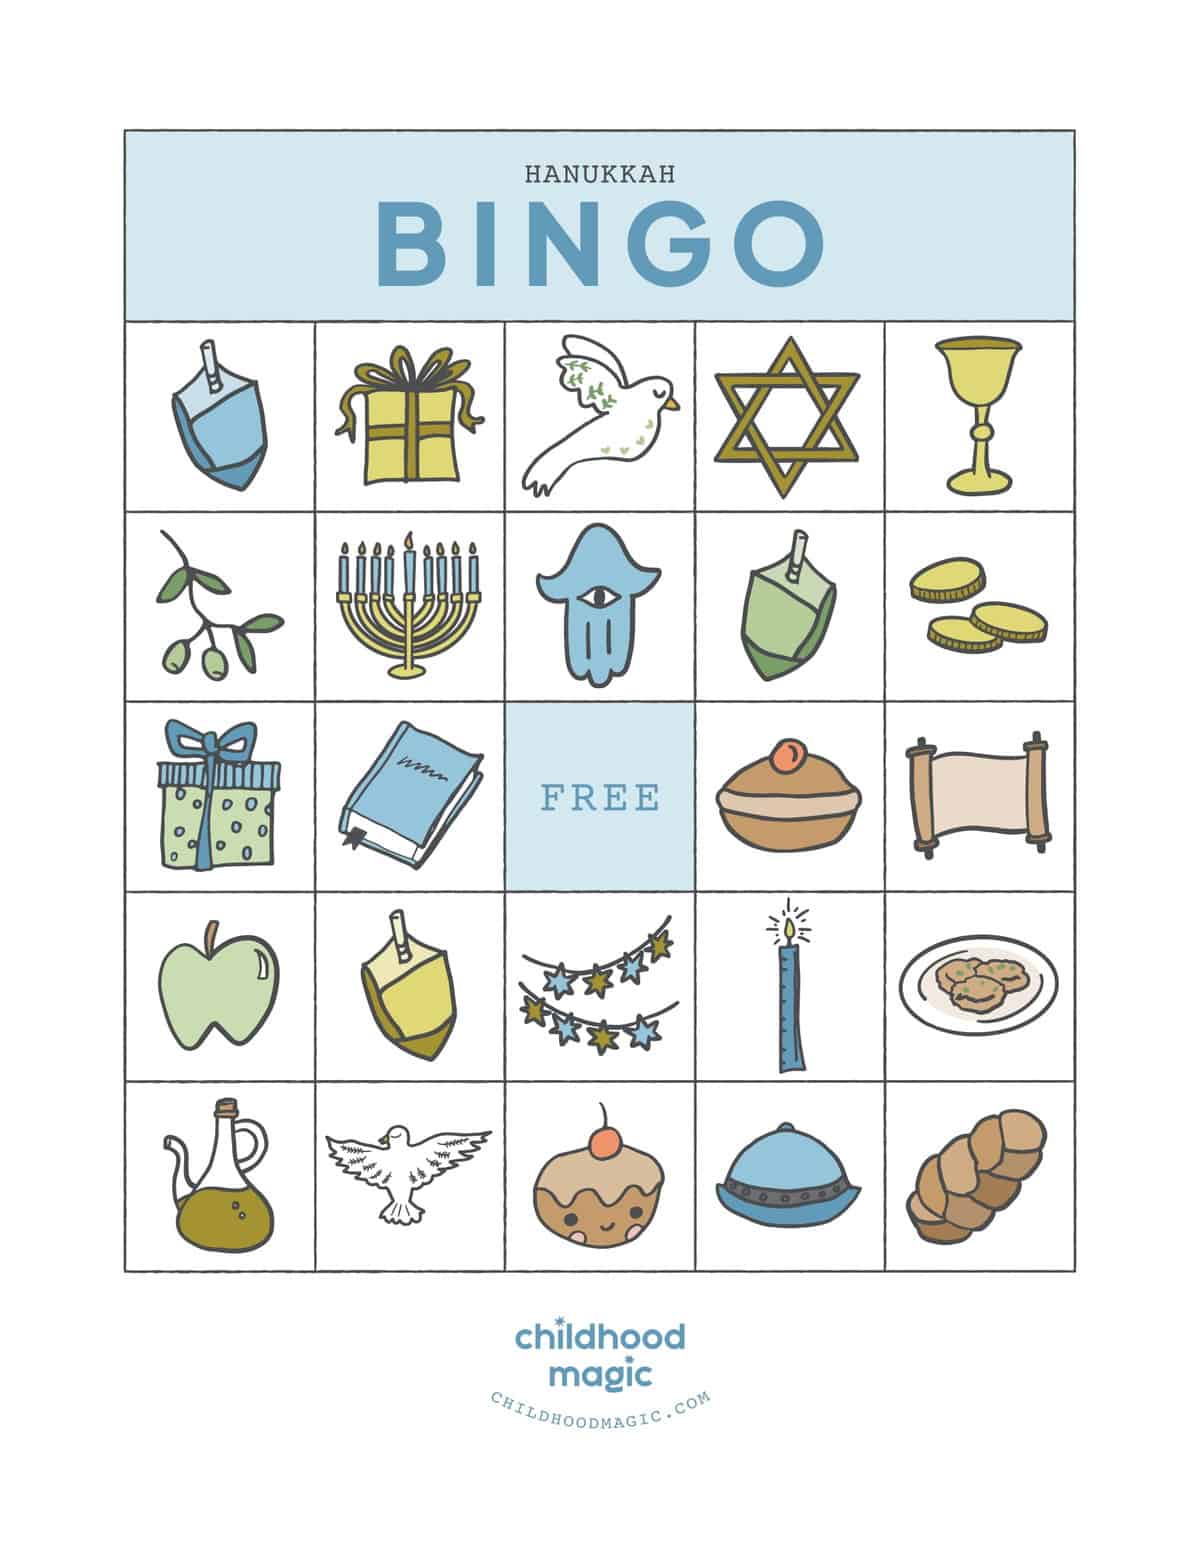 Hanukkah symbols on a printable Bingo card. 